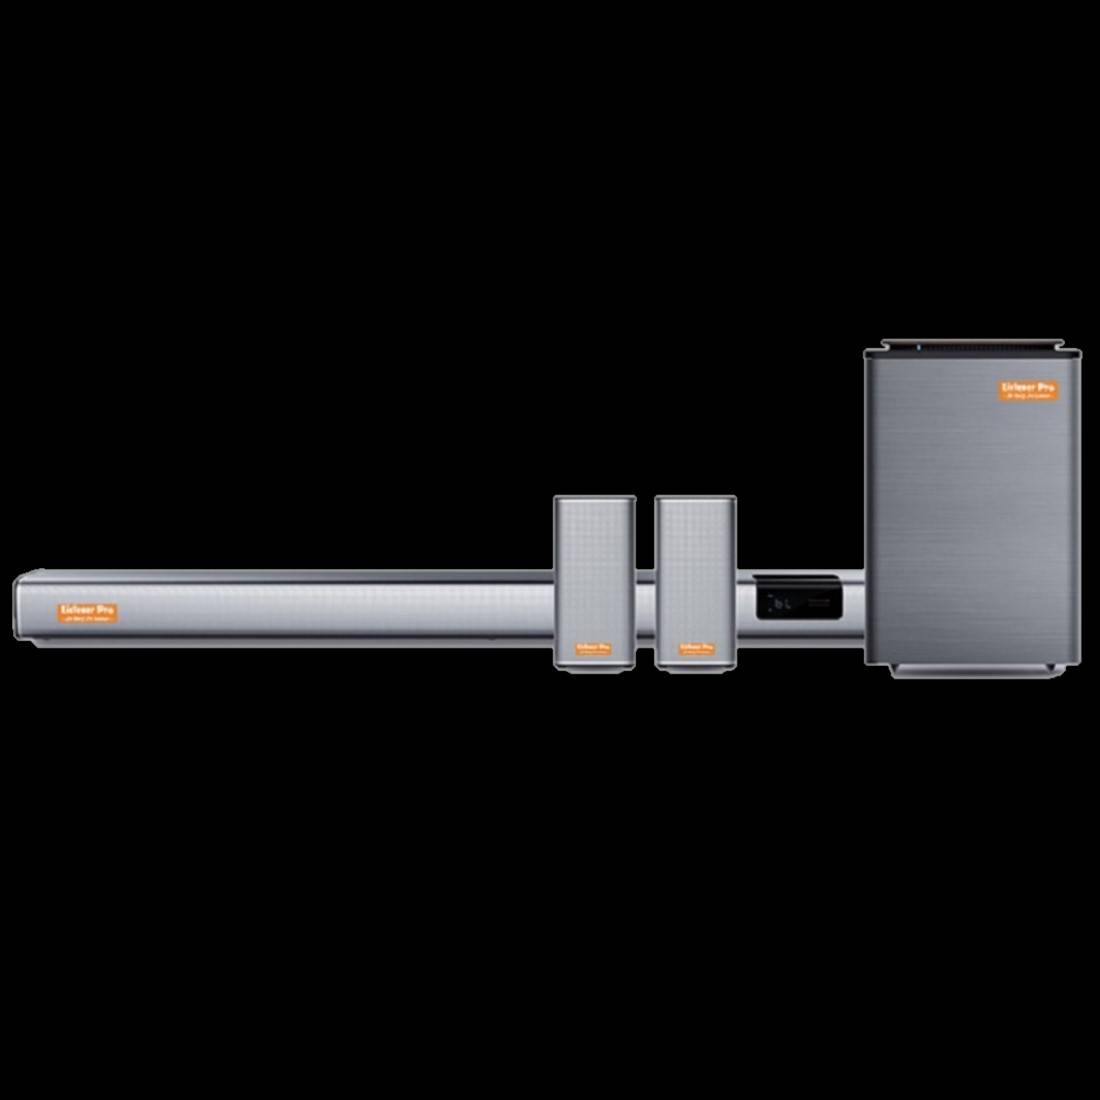 Hot-selling Tv Soundbars - Wireless 5.1 CH Surround Sound Home Theater Sound Bar System – Listener Pro